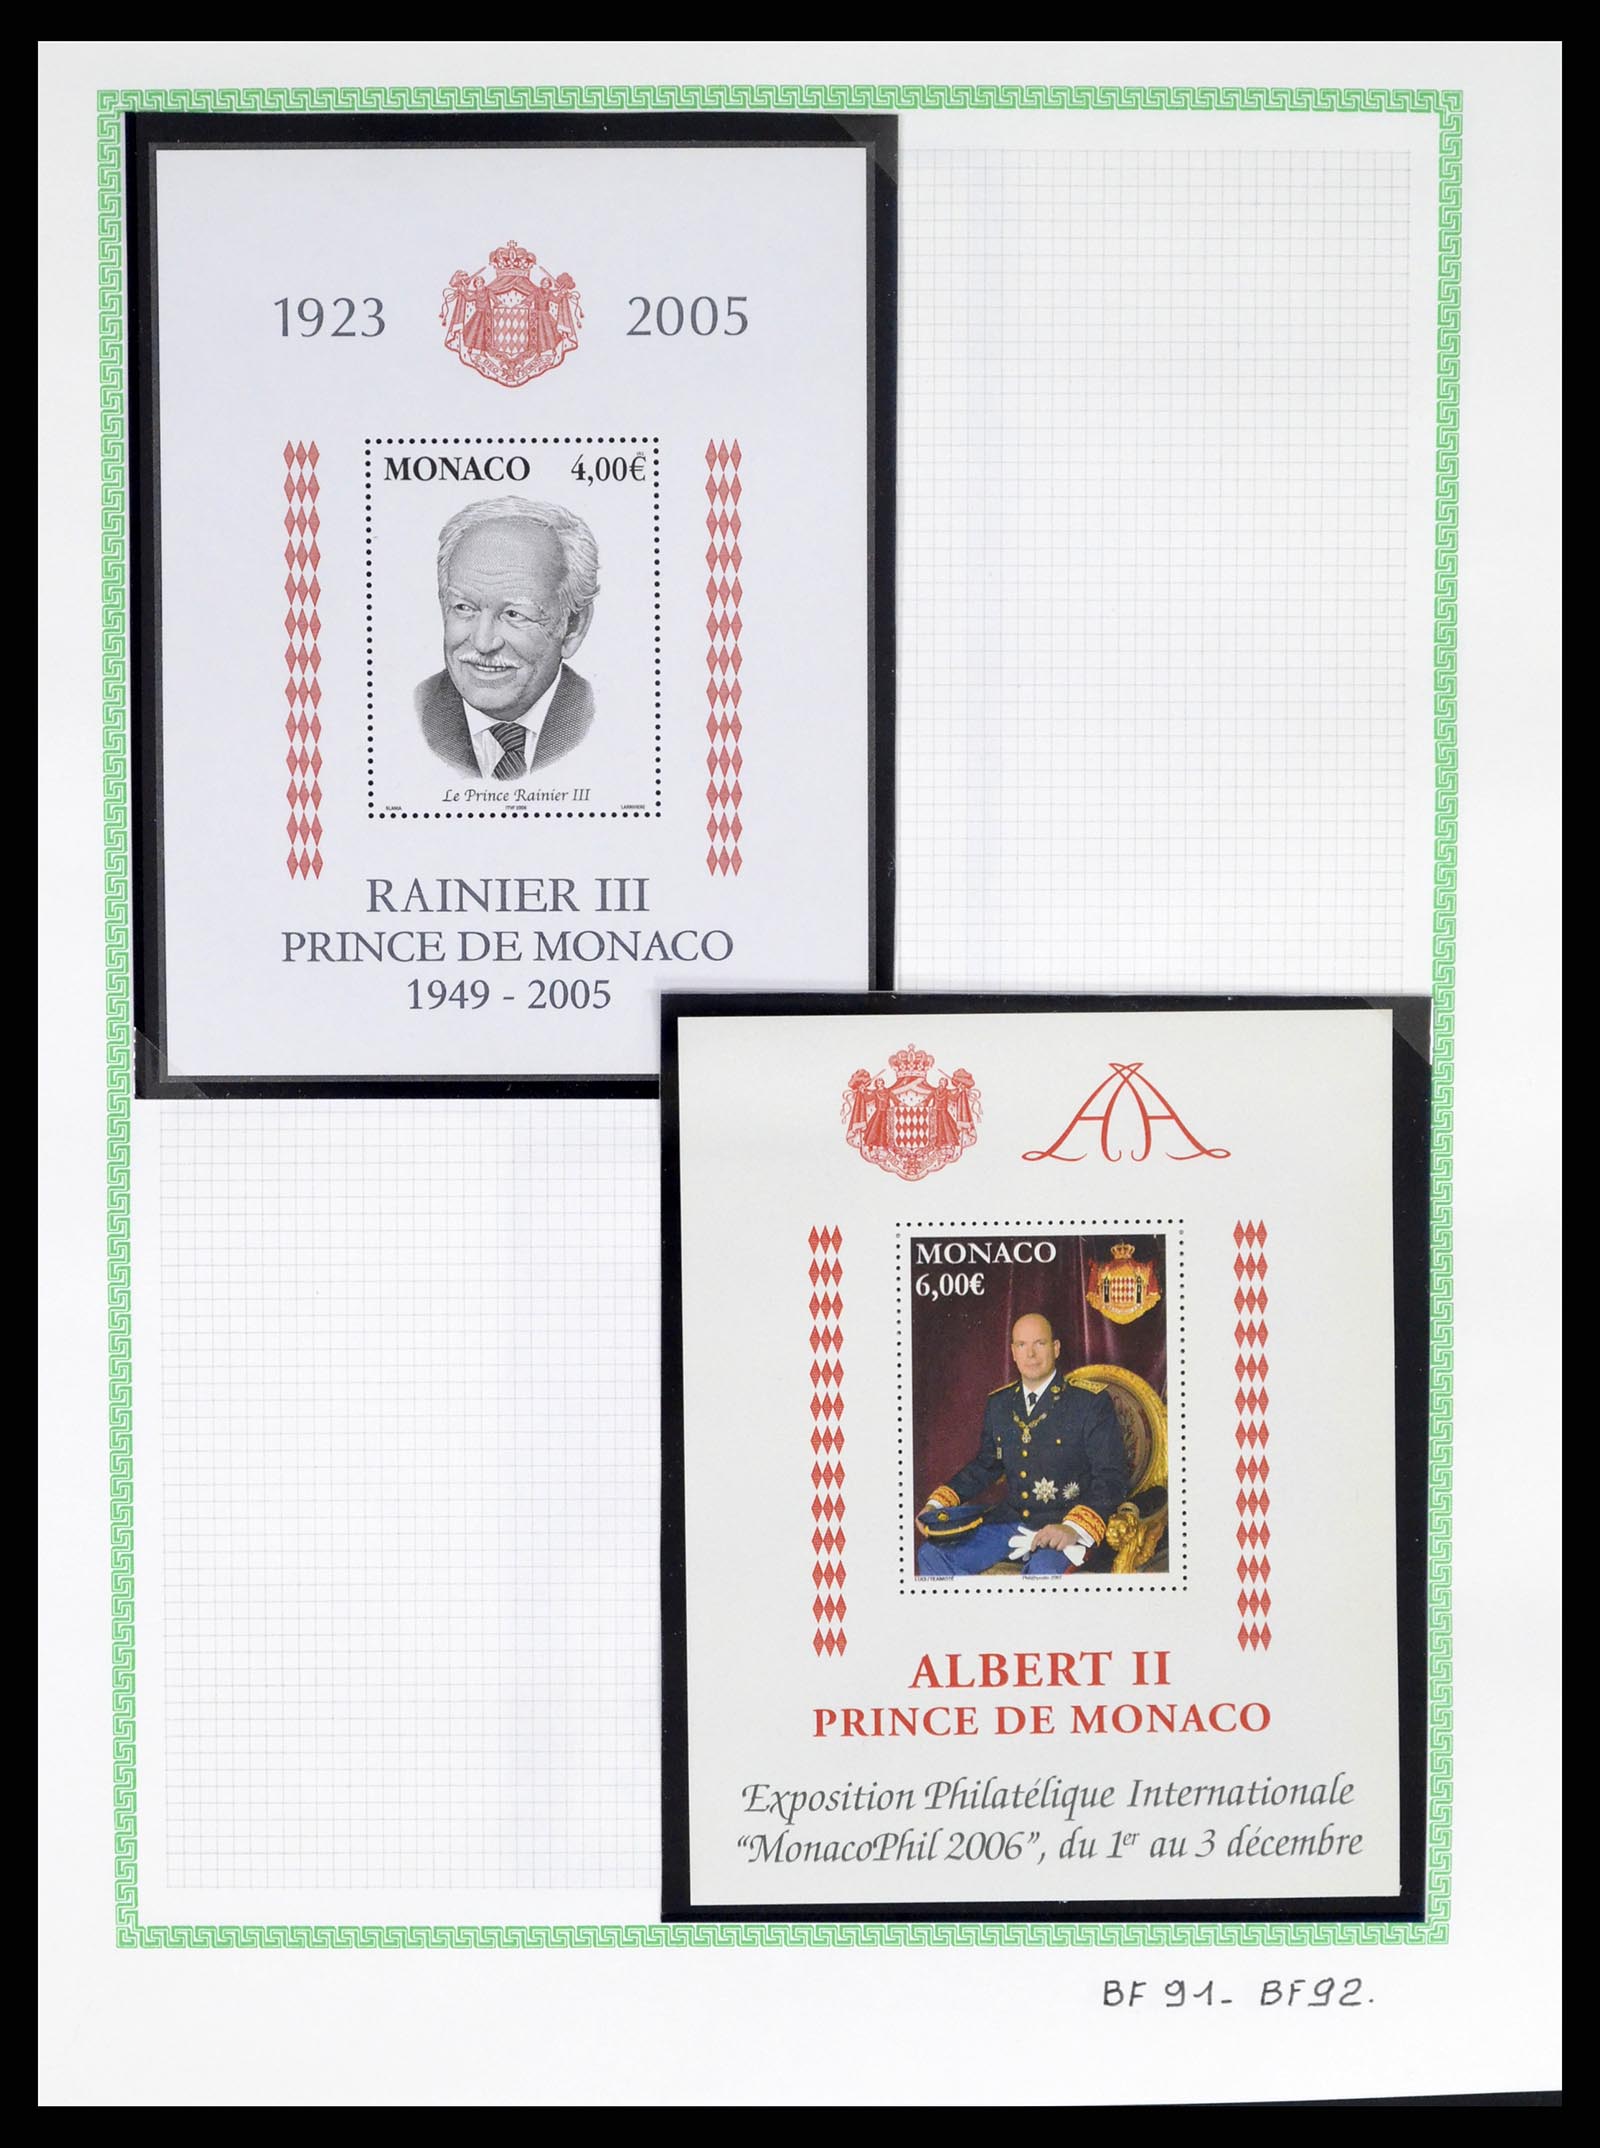 37380 463 - Stamp collection 37380 Monaco 1921-2015.